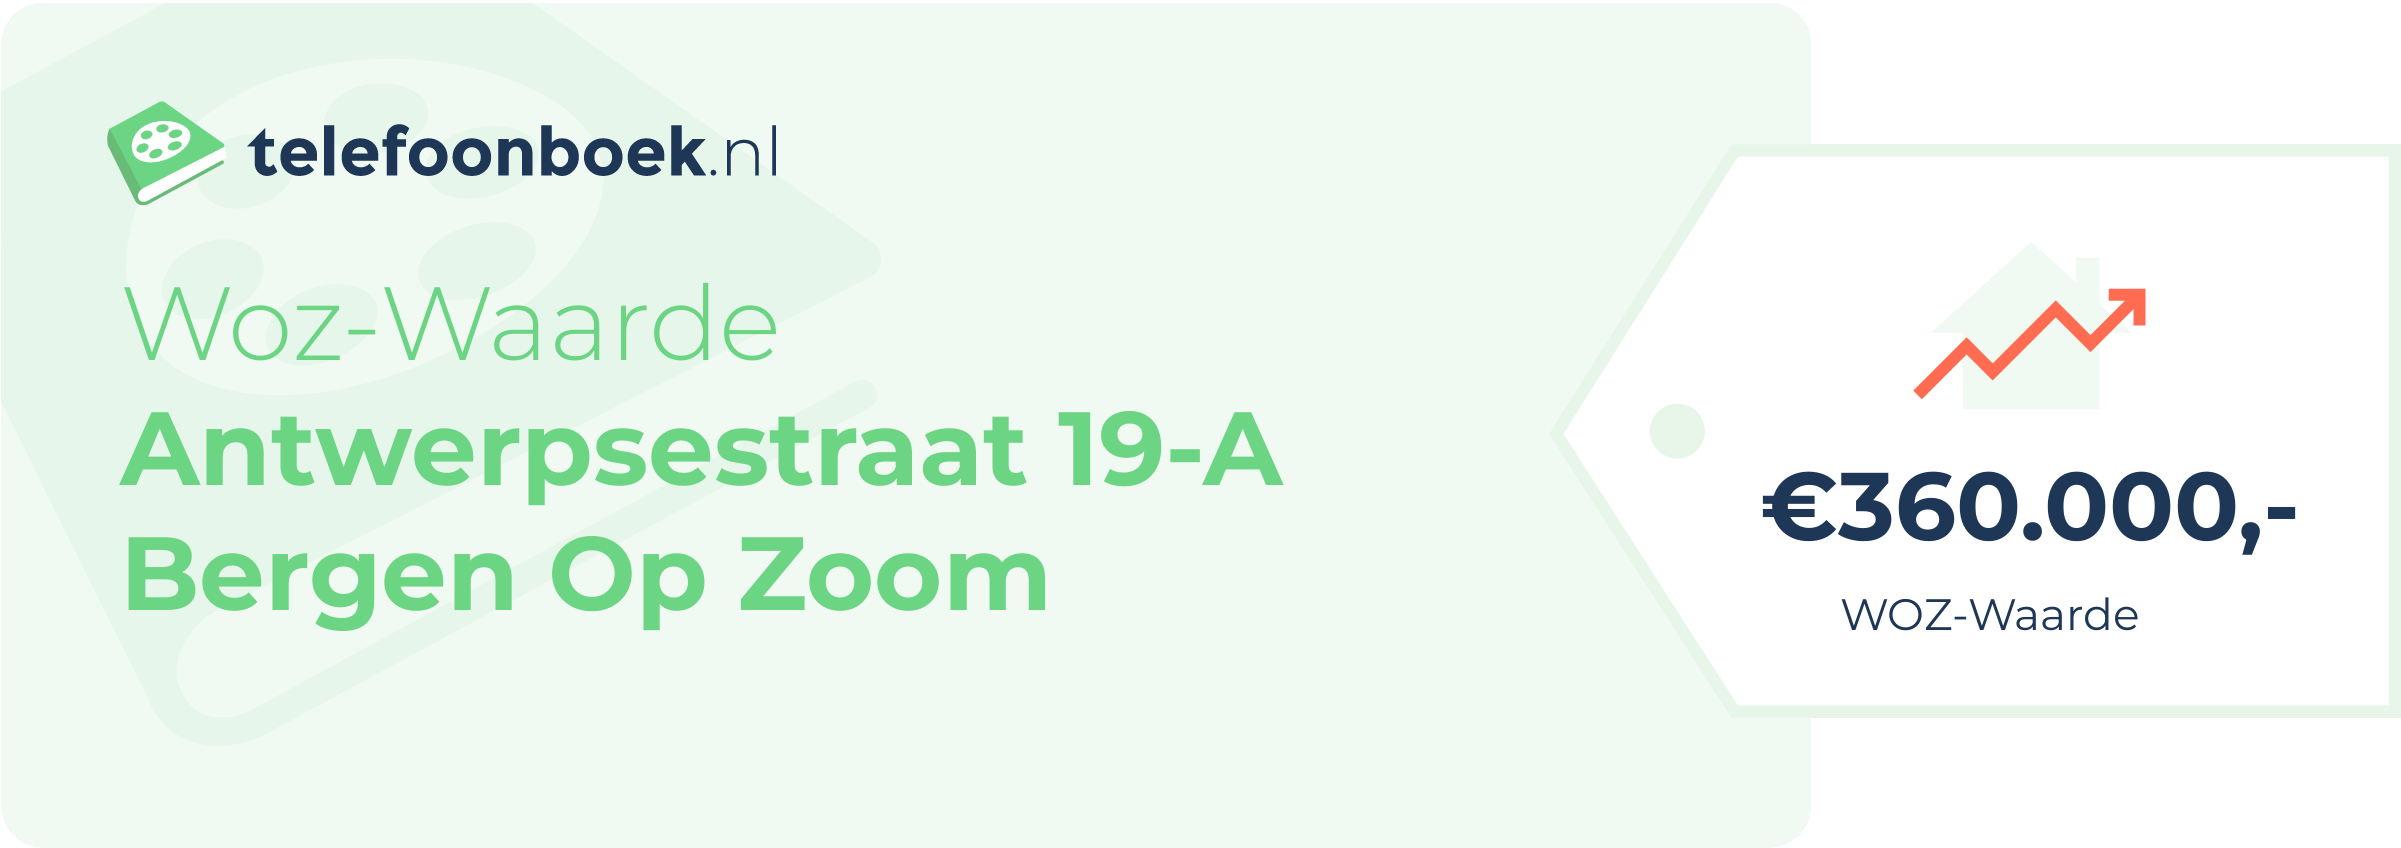 WOZ-waarde Antwerpsestraat 19-A Bergen Op Zoom